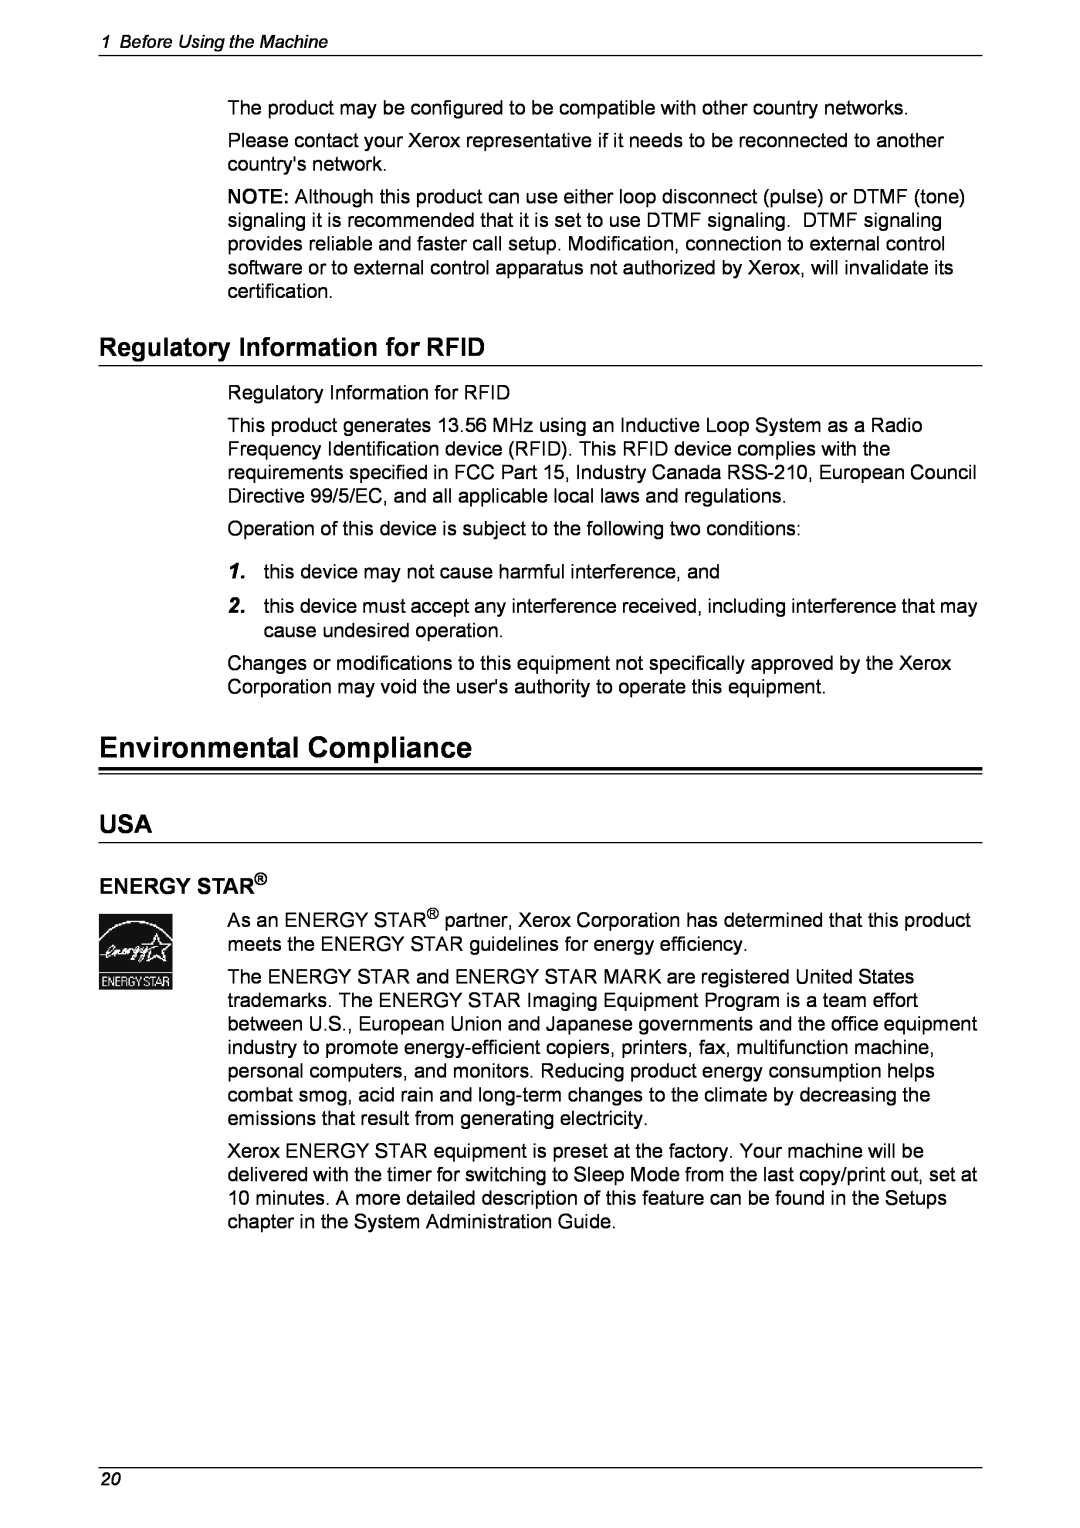 Xerox 5230 manual Environmental Compliance, Regulatory Information for RFID, Energy Star 